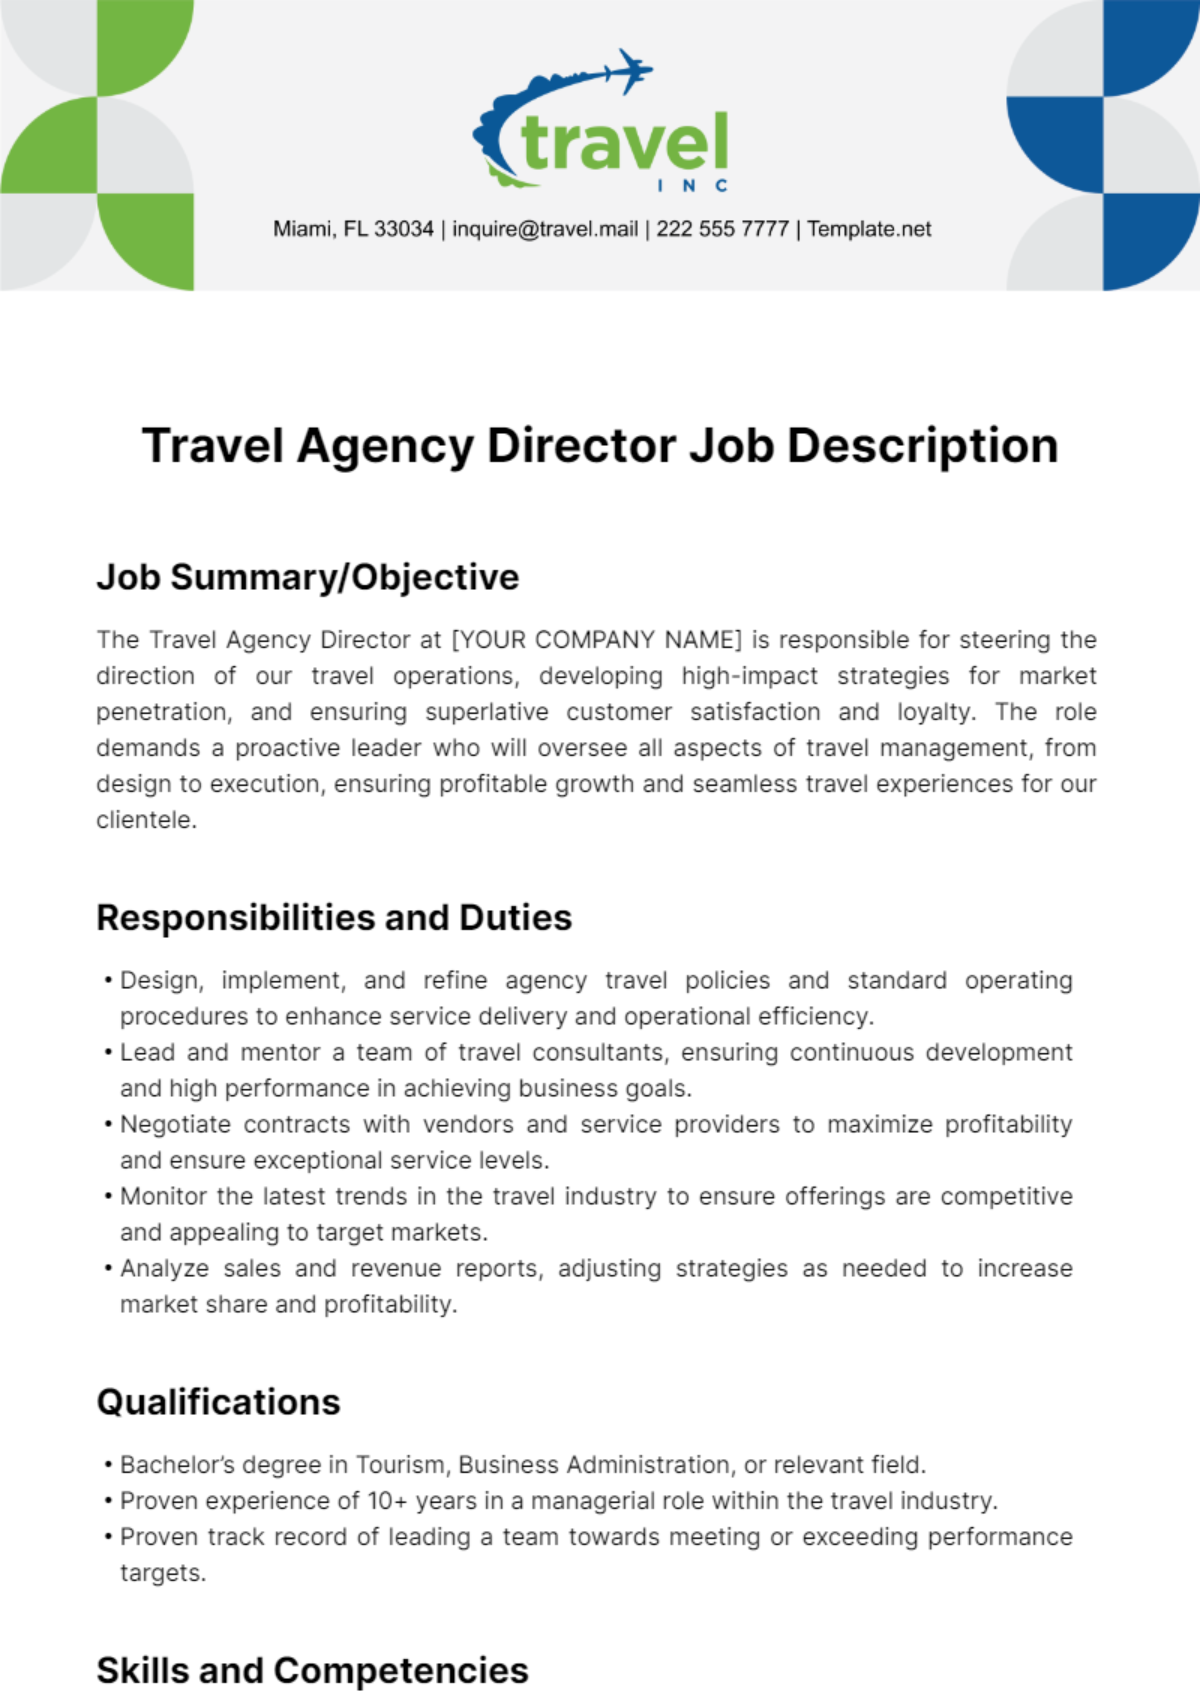 Travel Agency Director Job Description Template